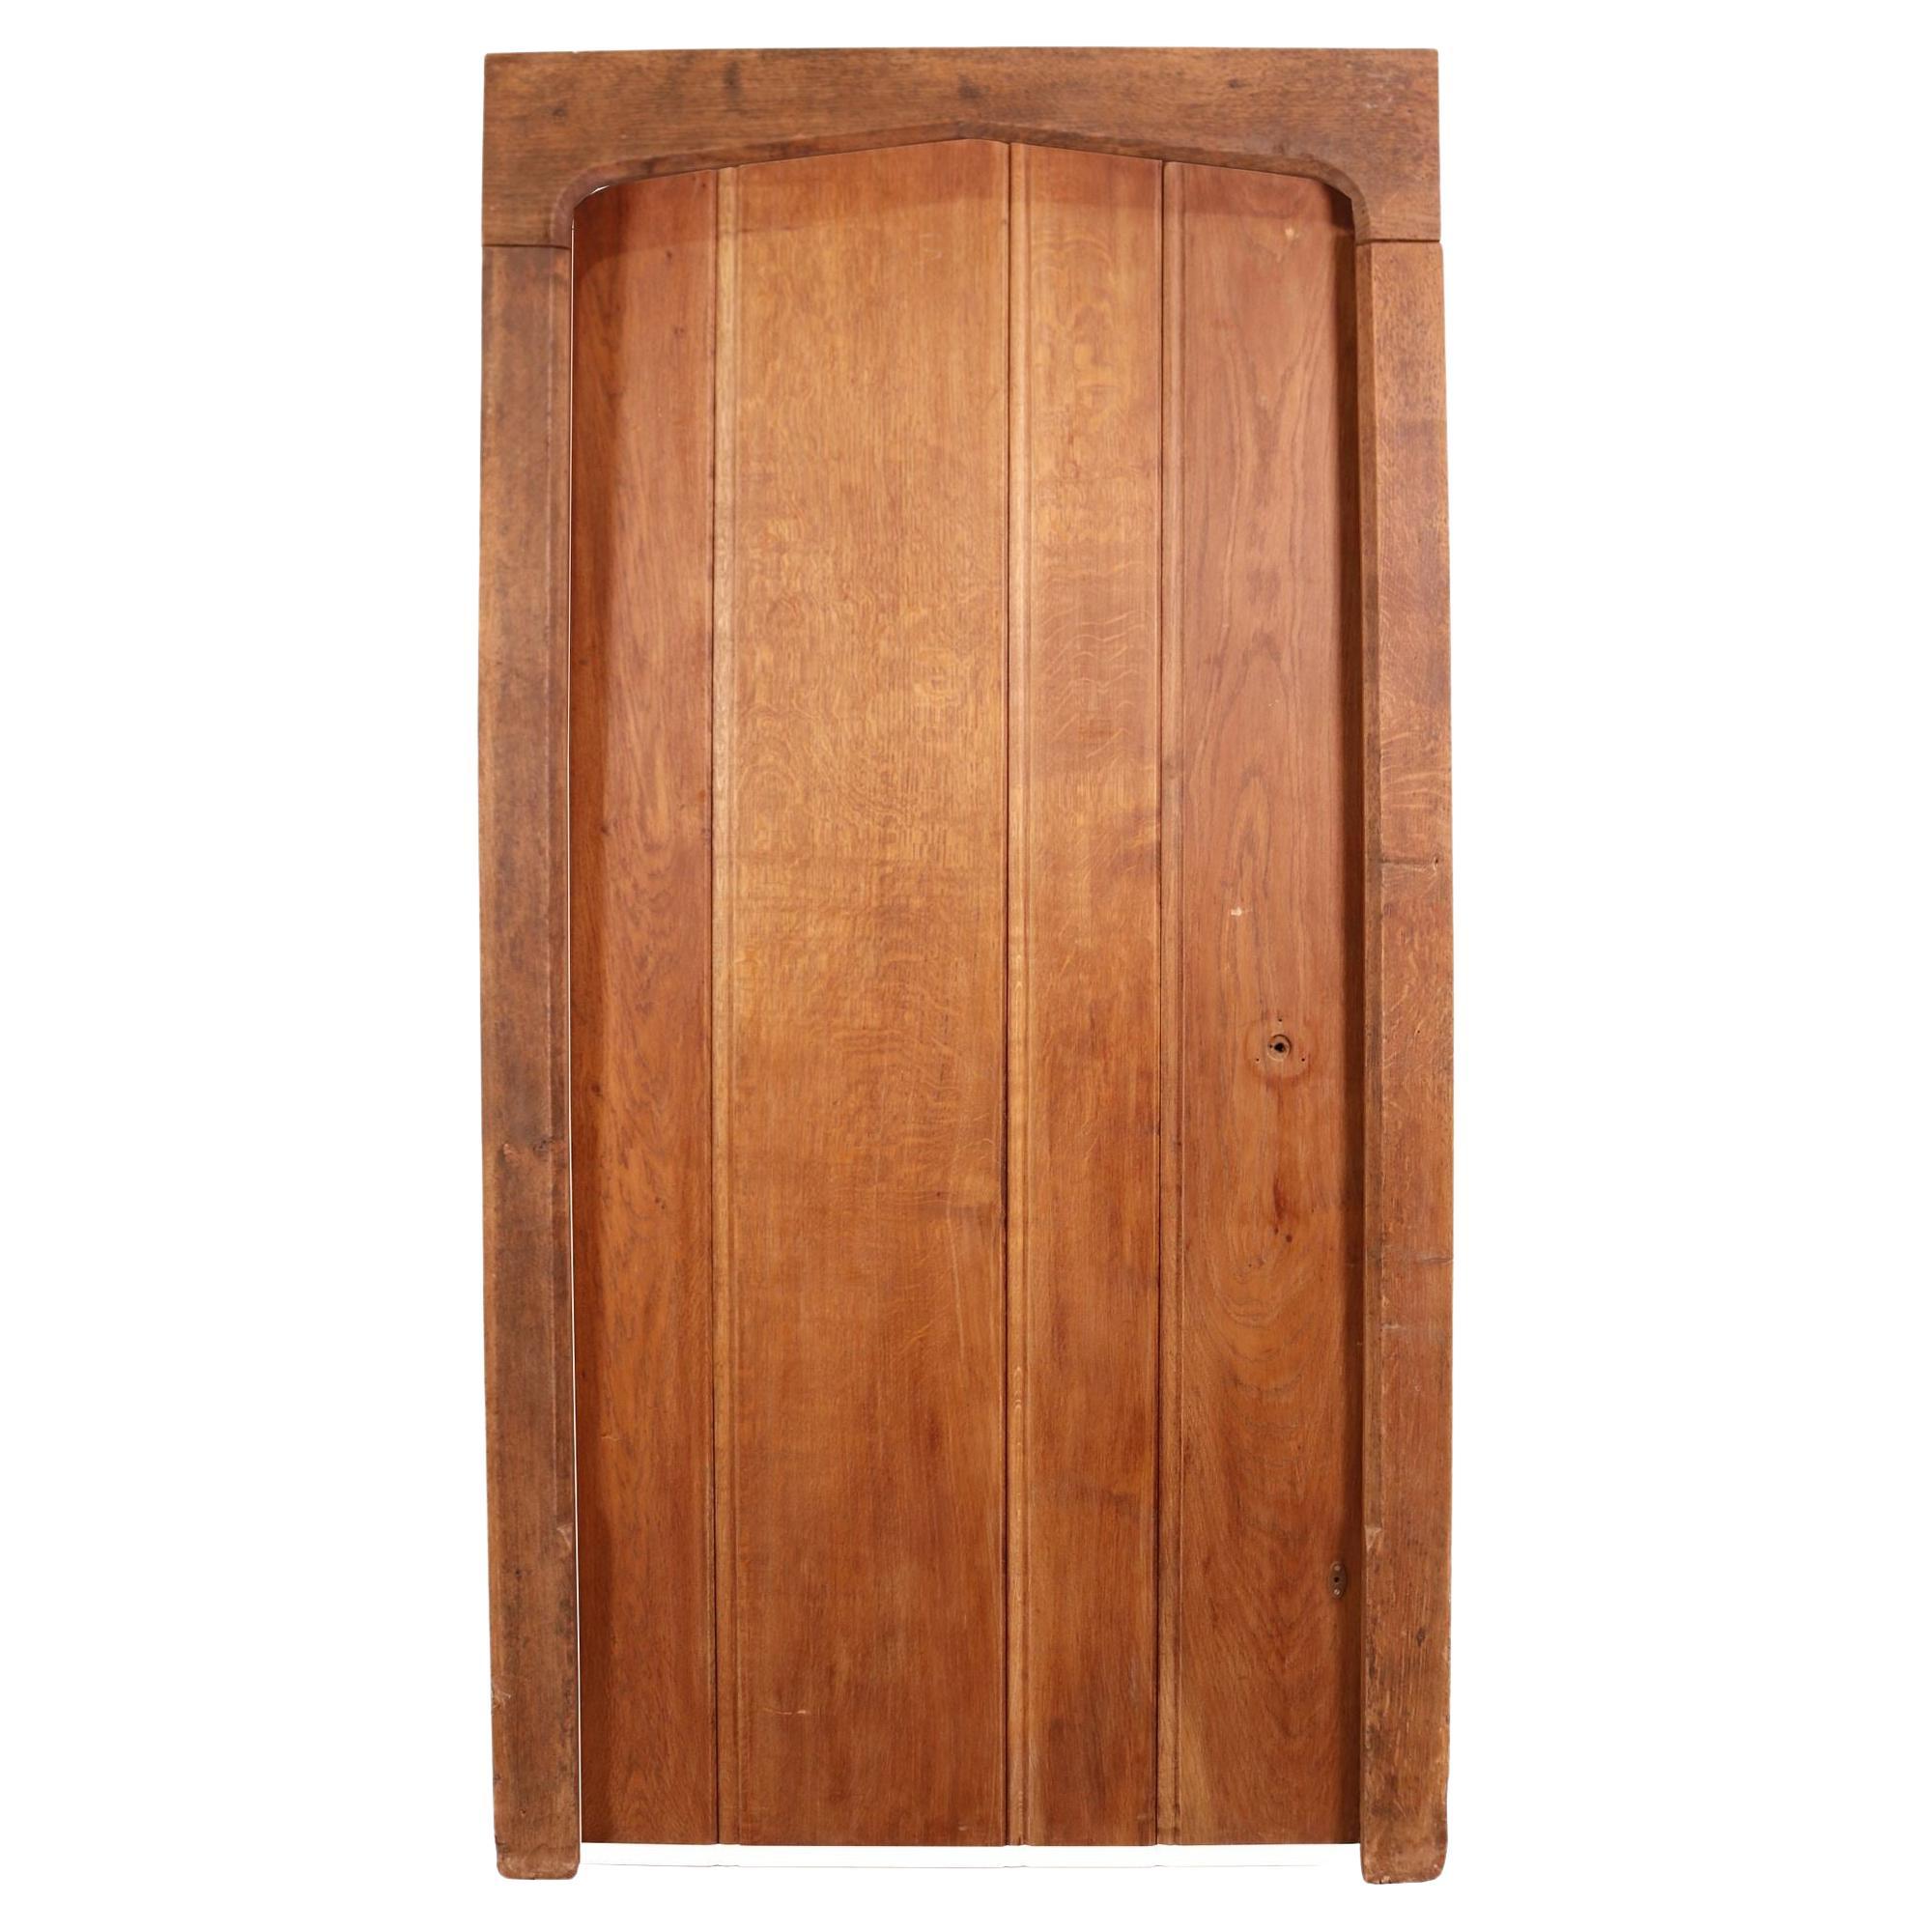 Reclaimed Oak Door with Frame For Sale